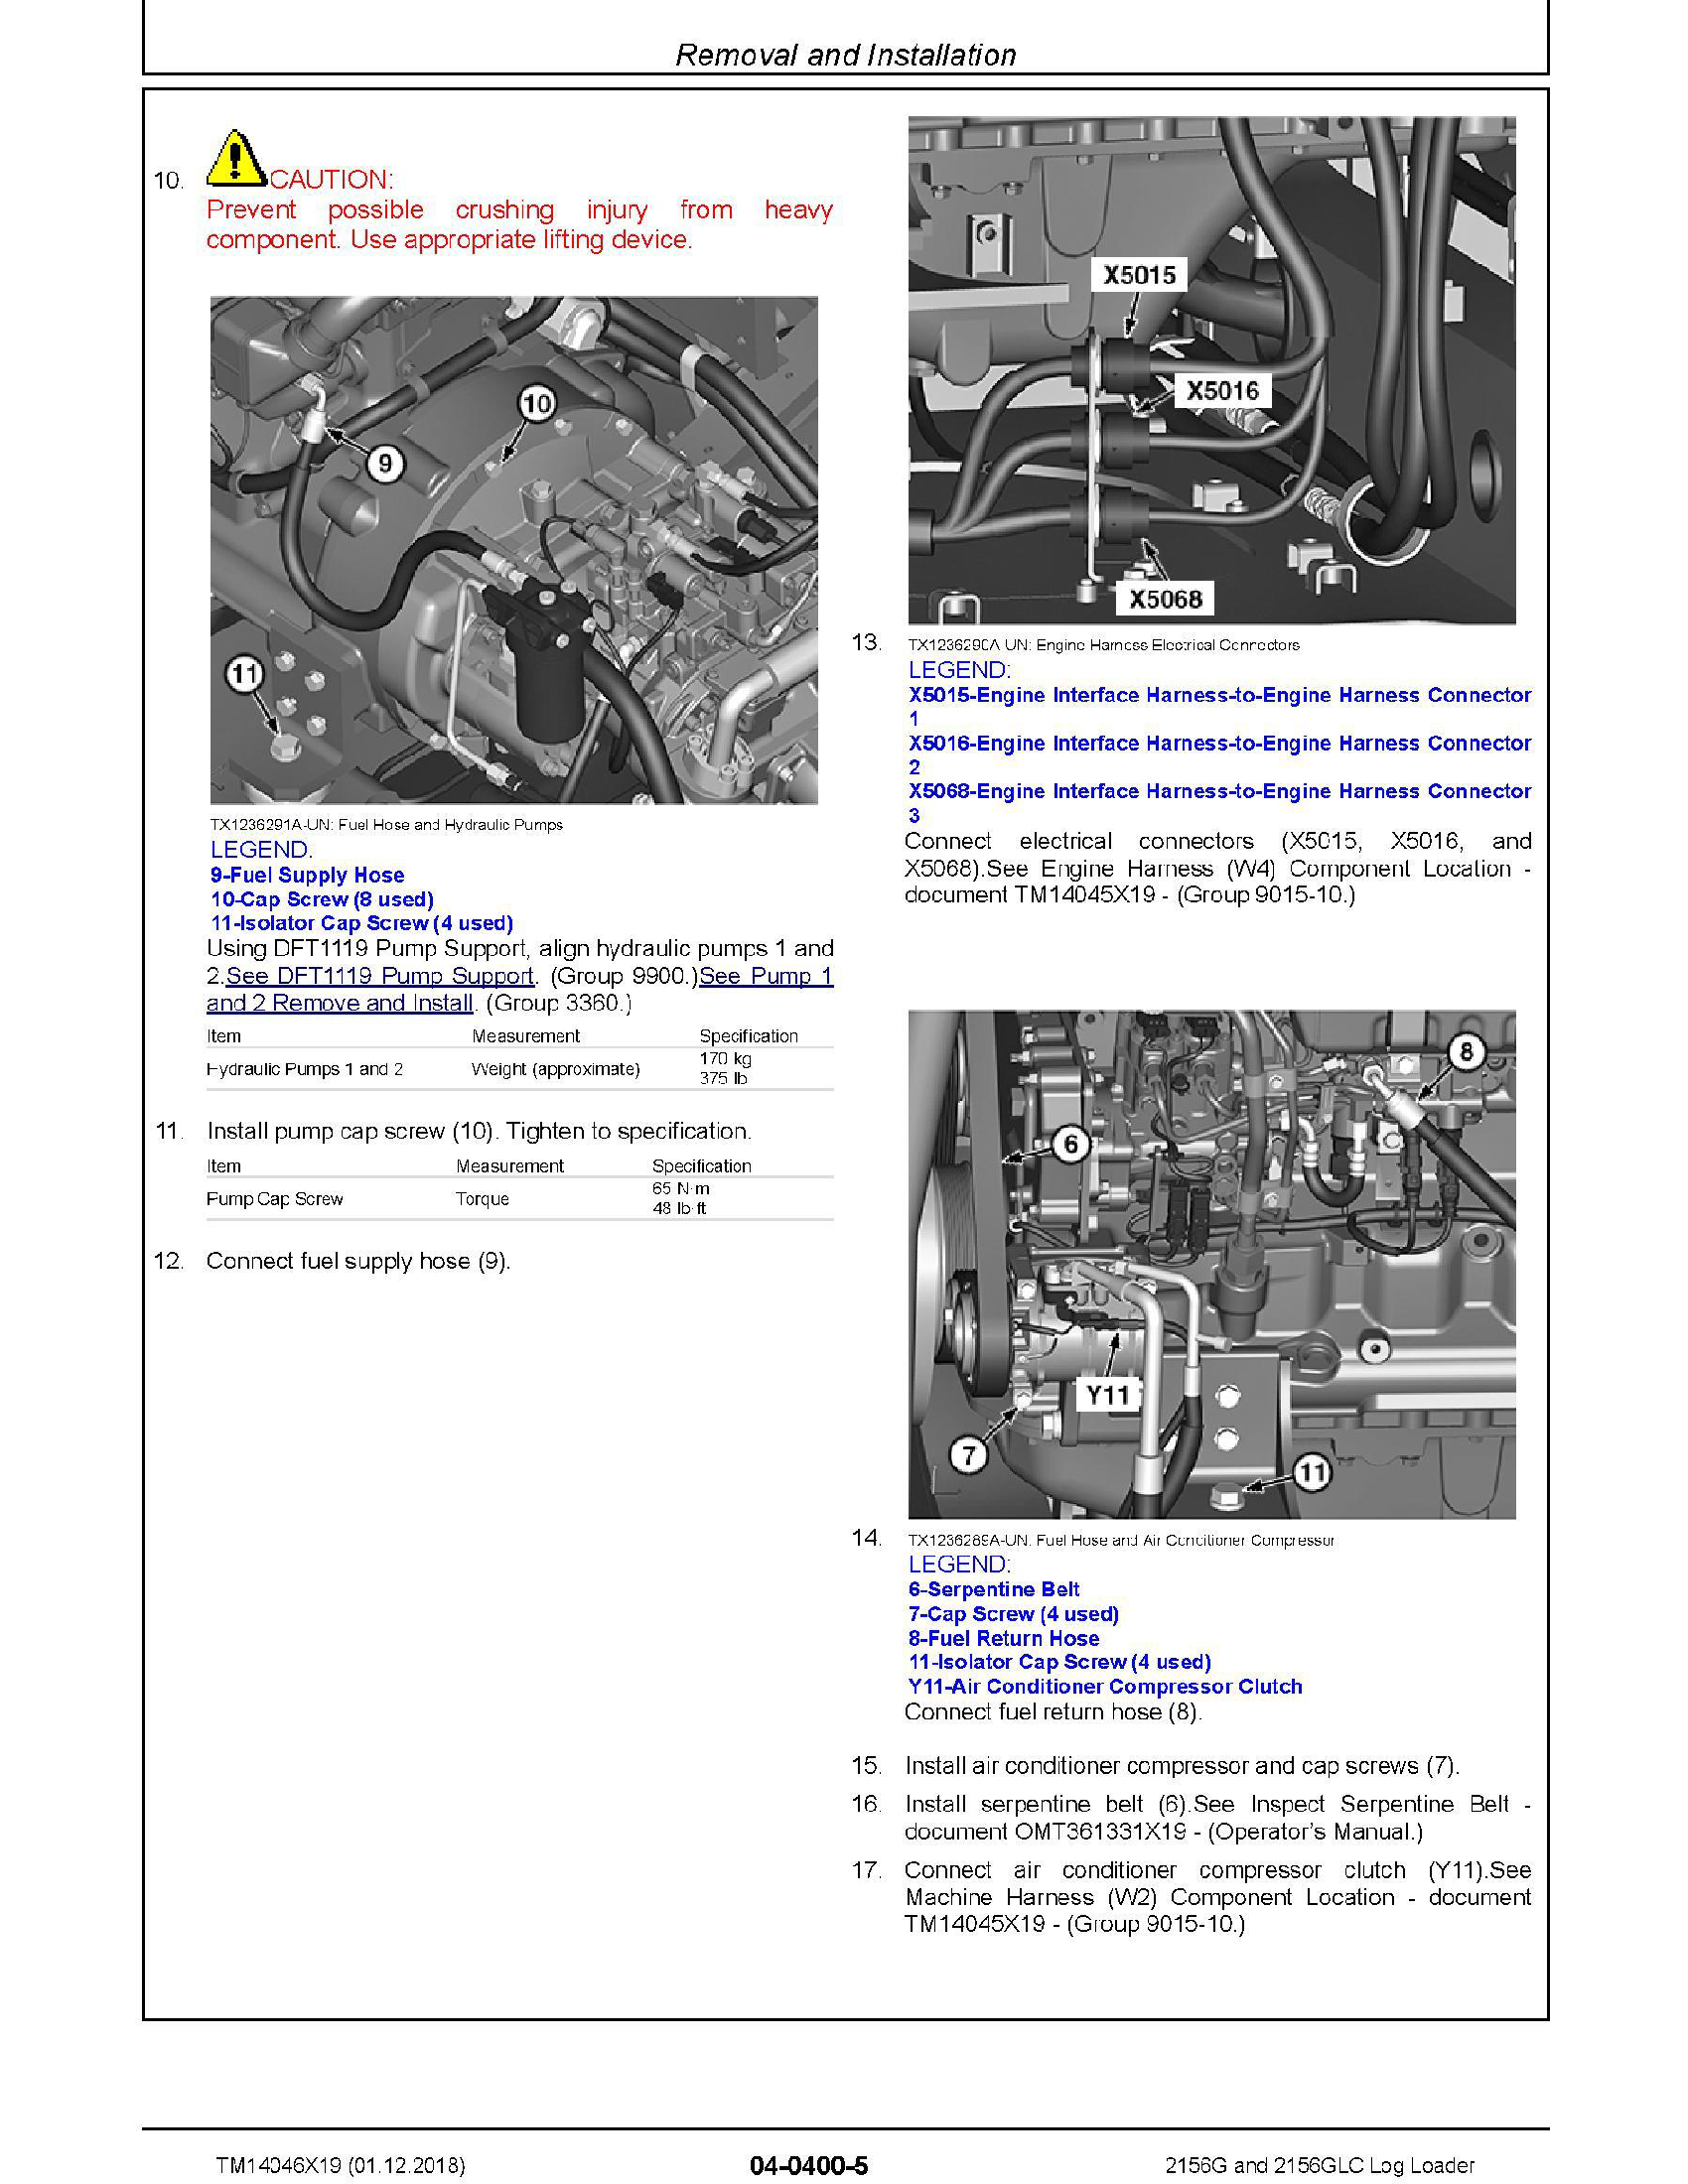 John Deere W235 manual pdf